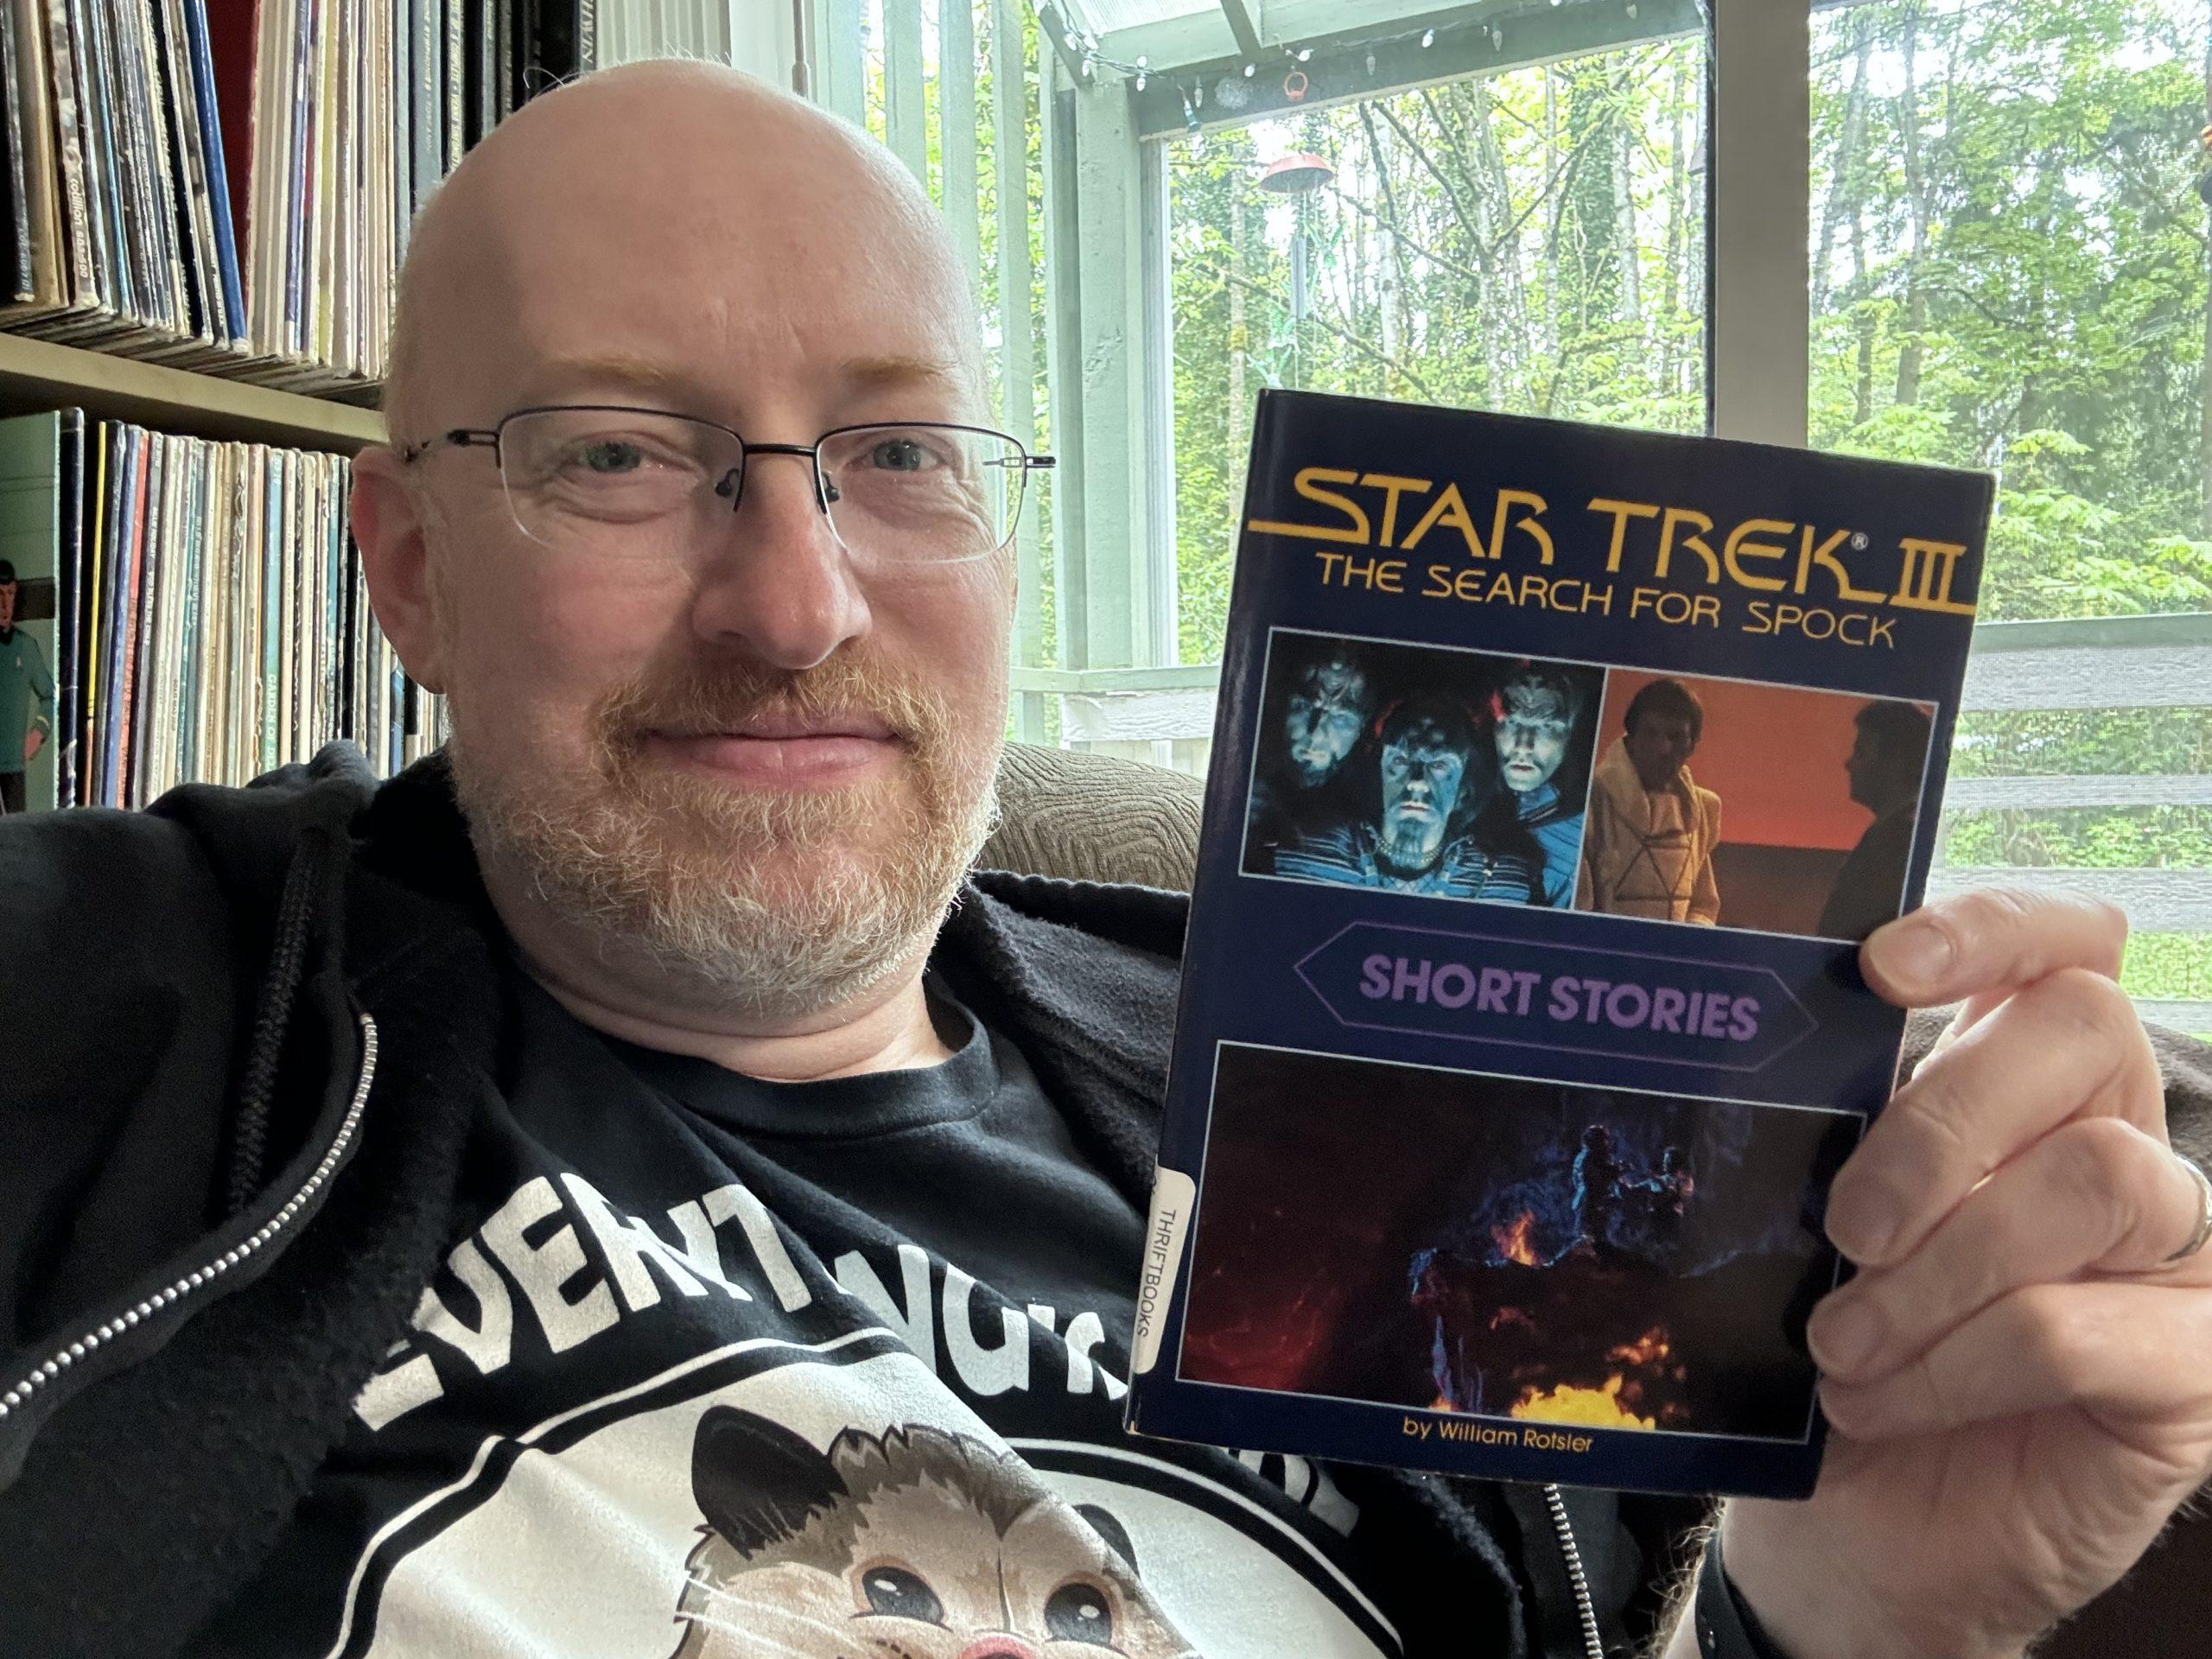 Me holding Star Trek III Short Stories